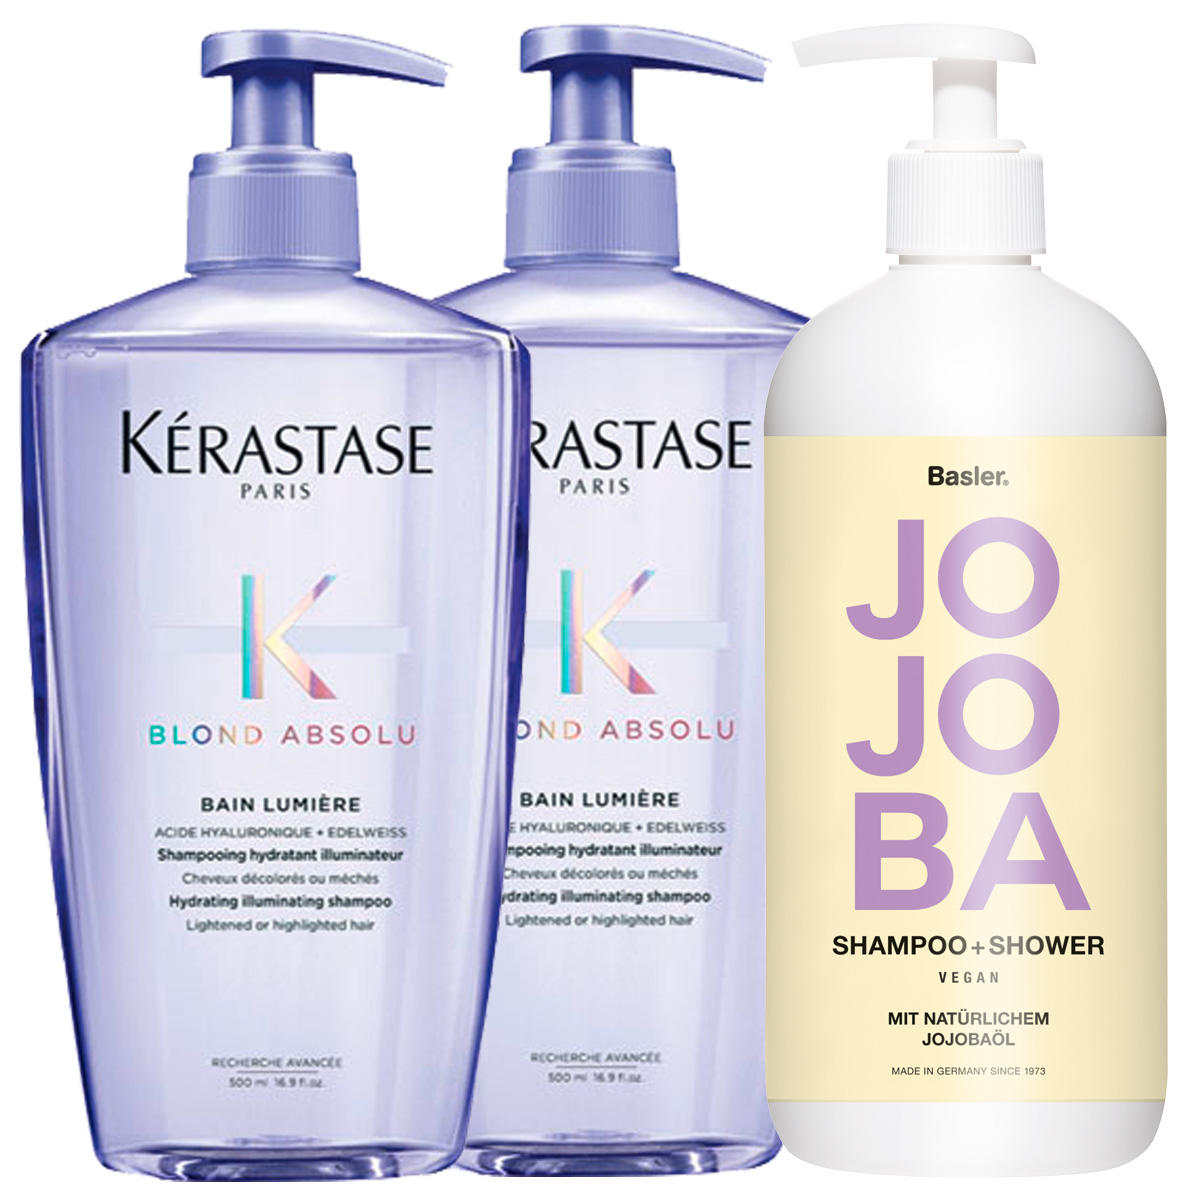 Kérastase Blond Absolu Bain Lumière Bundle 2 x 500 ml + Basler Jojoba Shampoo & Shower 500 ml gratis - 1